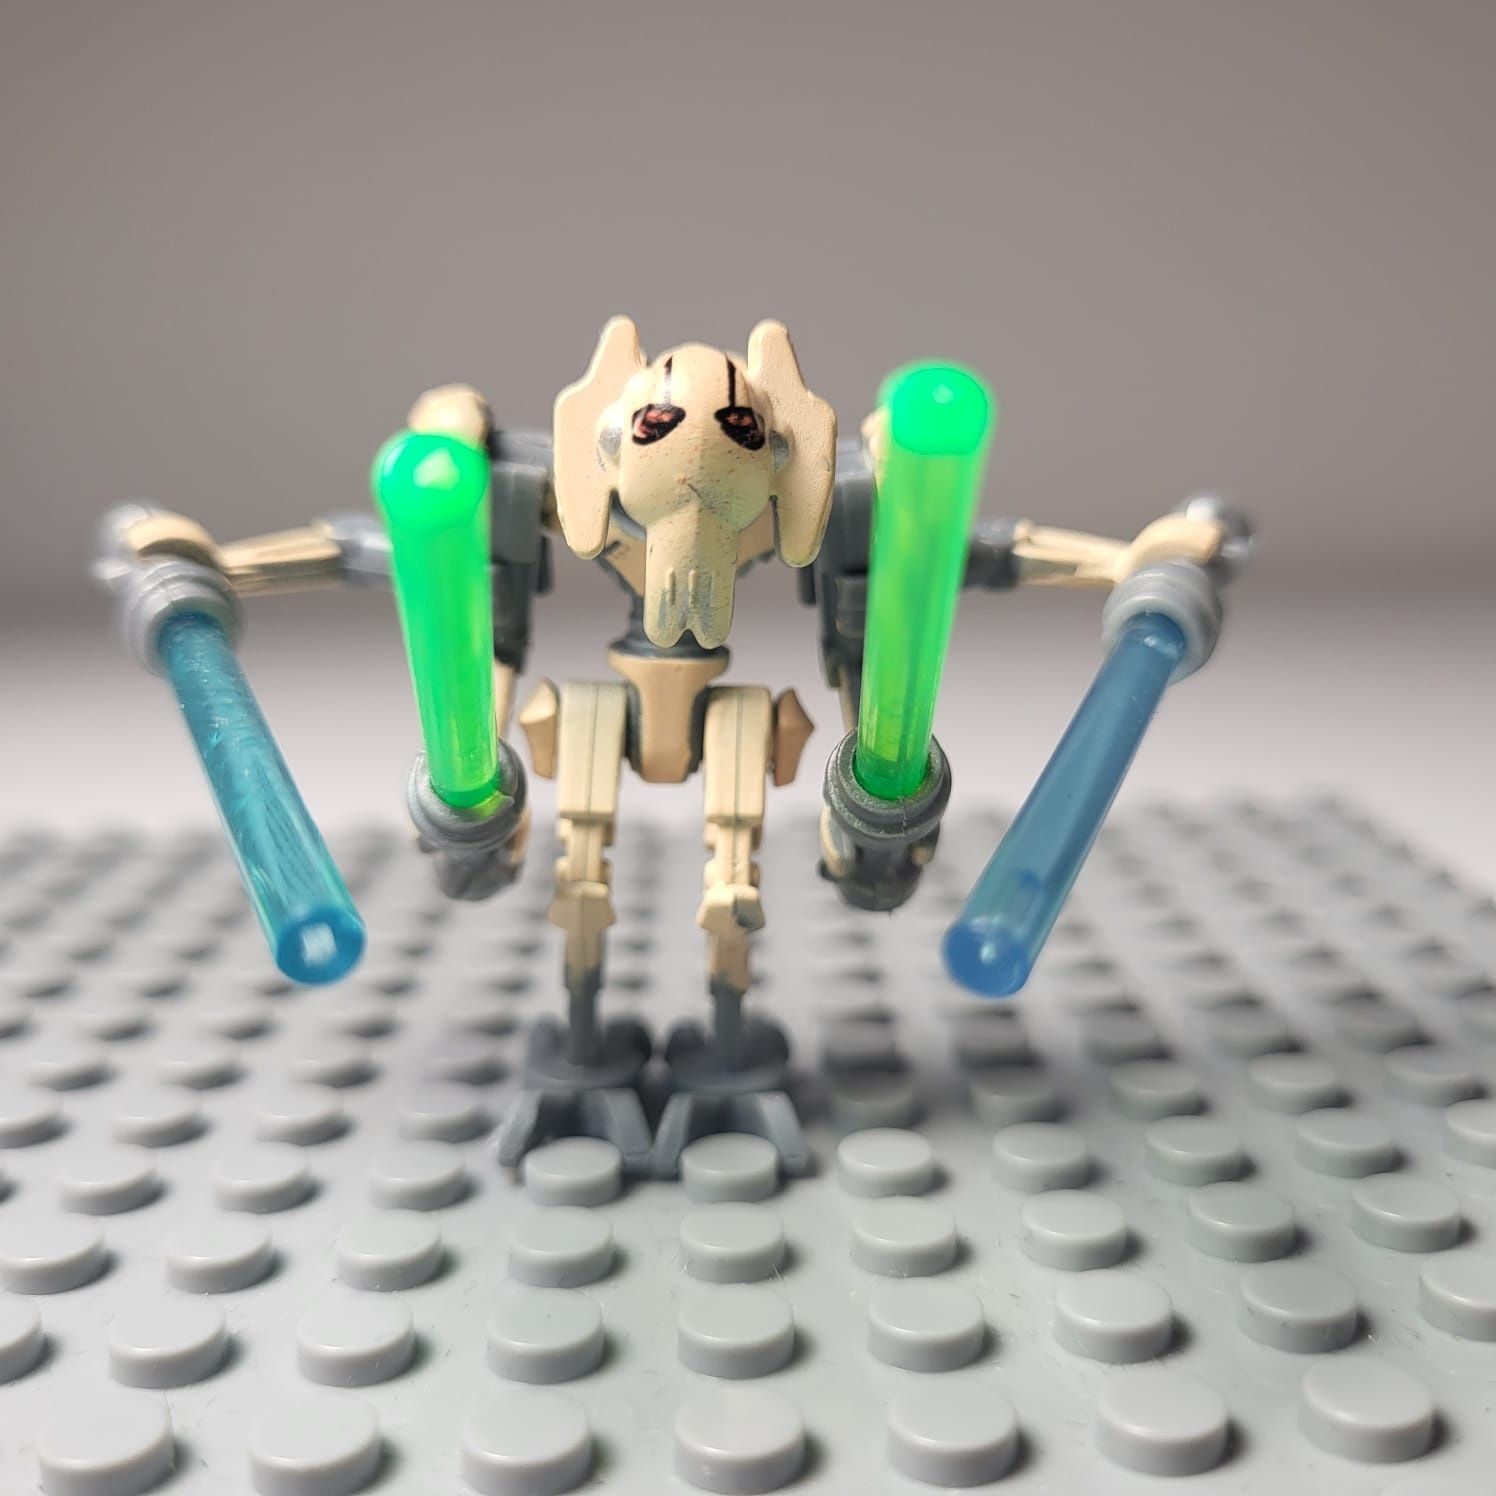 Generał Grievous | Star Wars | Gratis Naklejka Lego